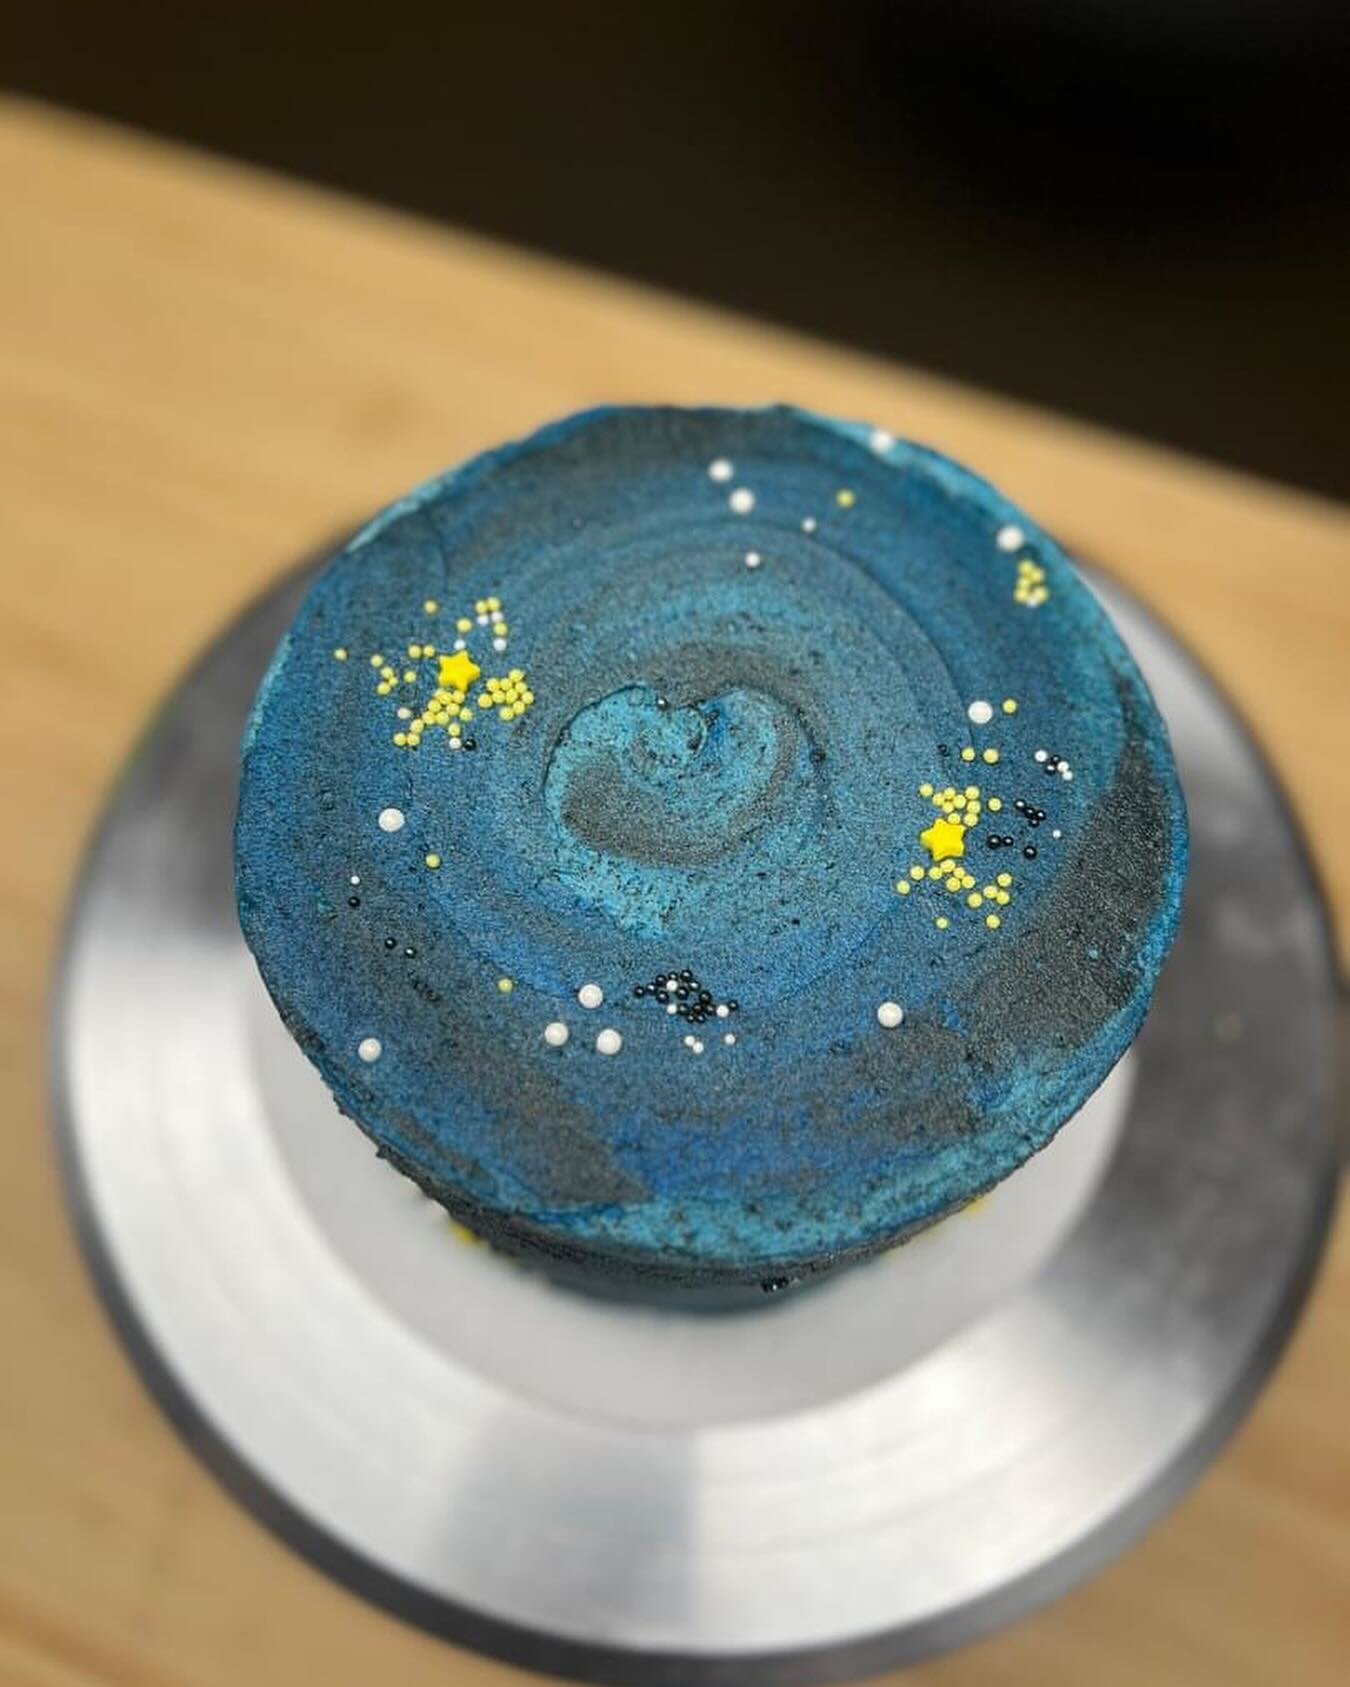 Minimalist Starry Night cake to celebrate a special birthday with a tasty oreo icing ⭐️💫 

 #johnsonvillecakes #cakesofwacotexas #cakesofmcgregortexas #cakesofwaco #birthdaycakesofwaco #cakesofmcgregor #wacocakes #littledetails